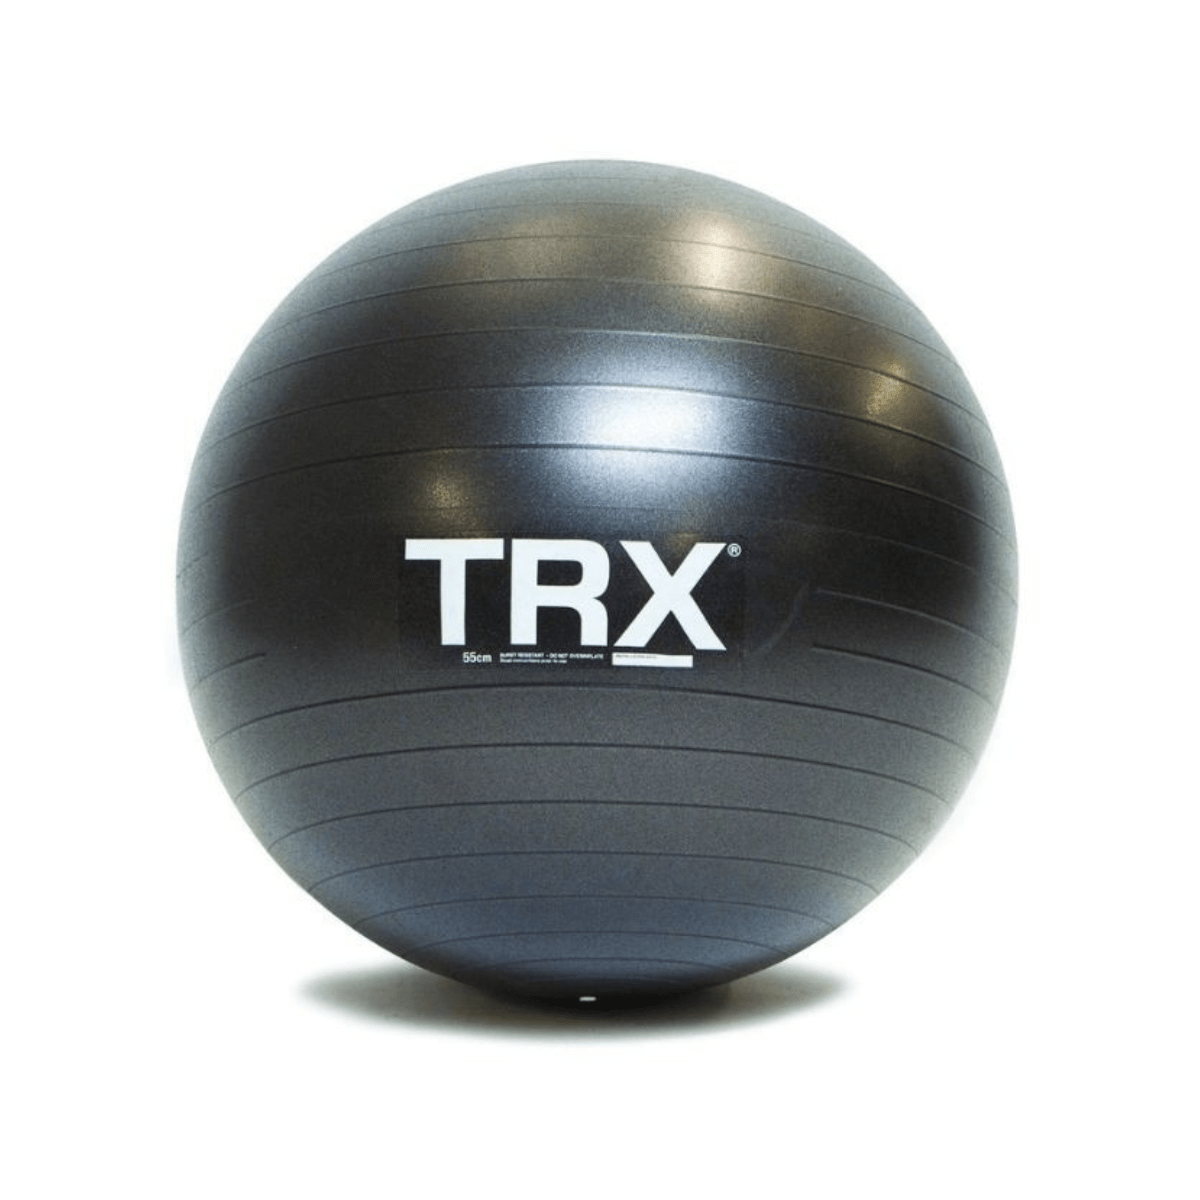 Trx medicine ball